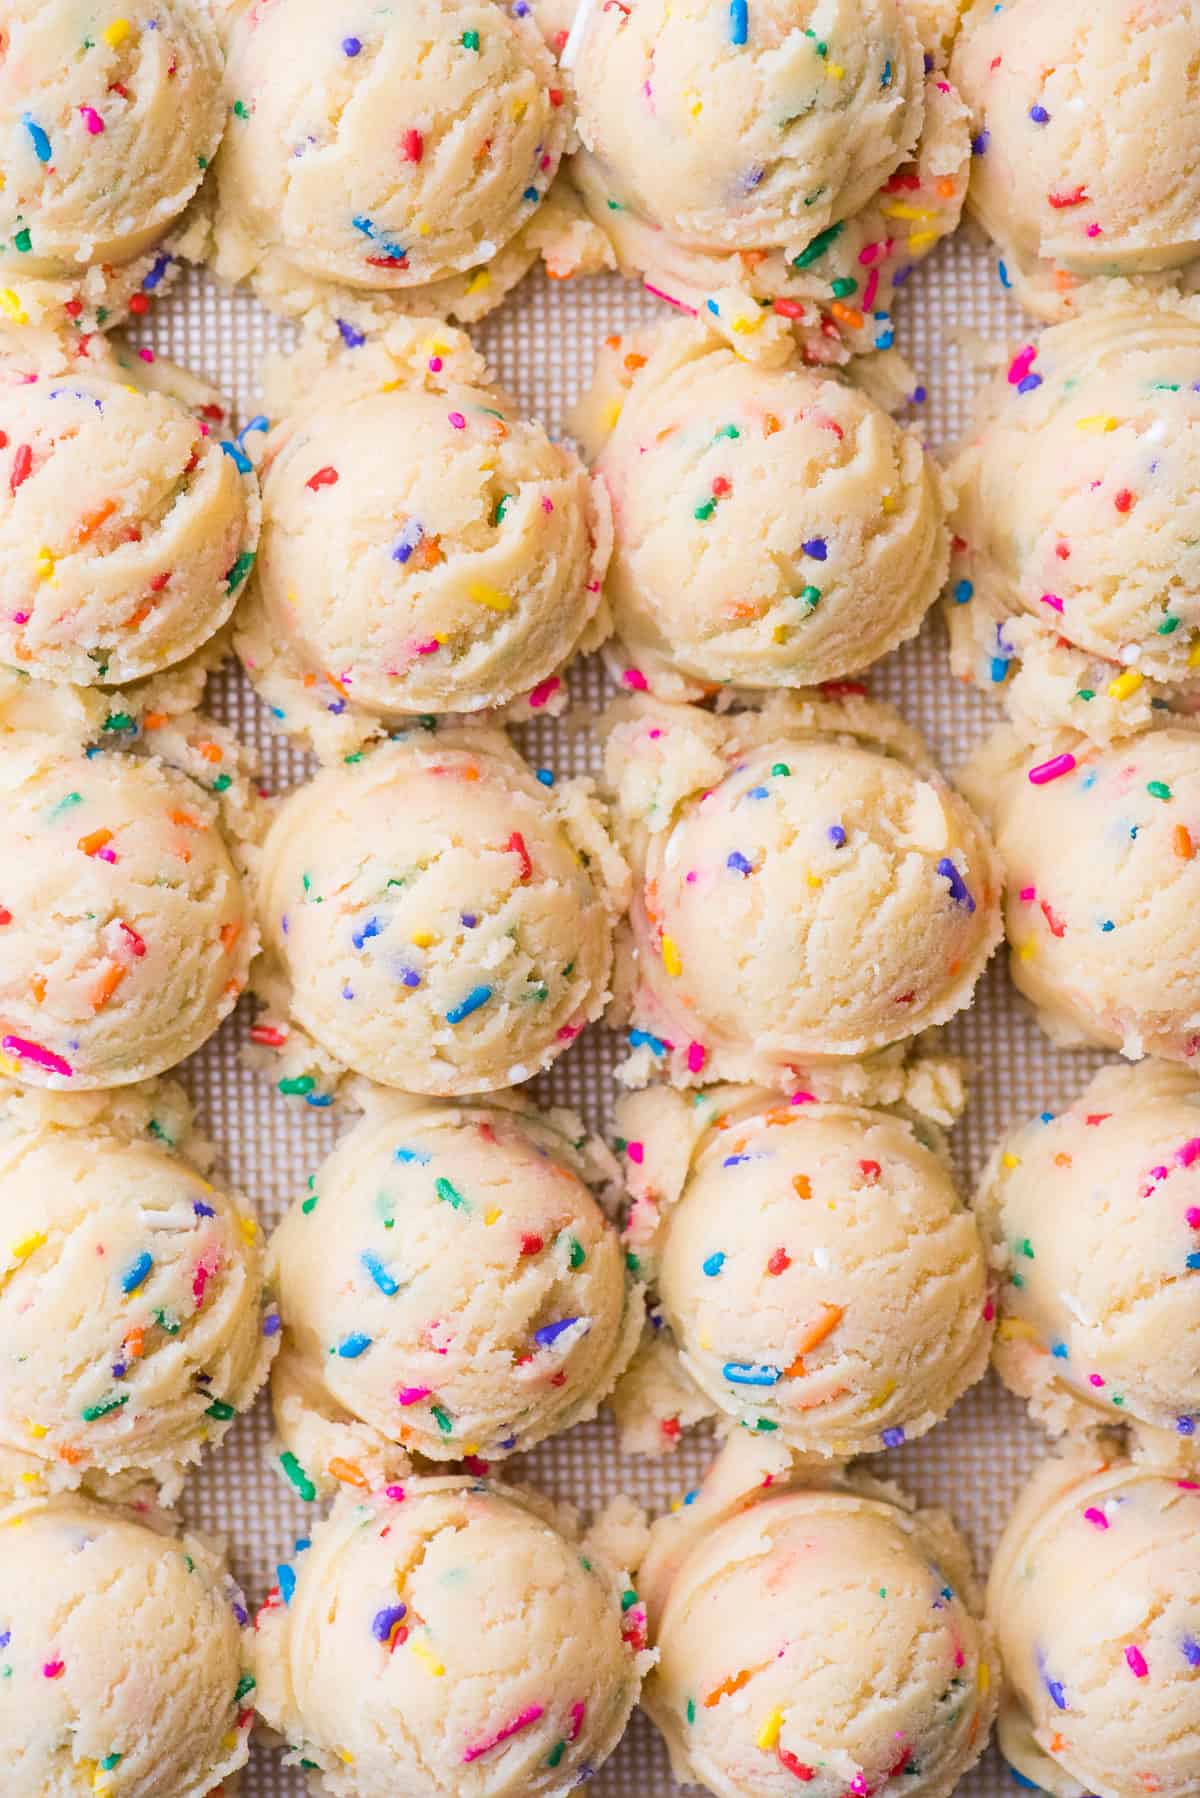 funfetti cookie dough balls arranged in a grid pattern